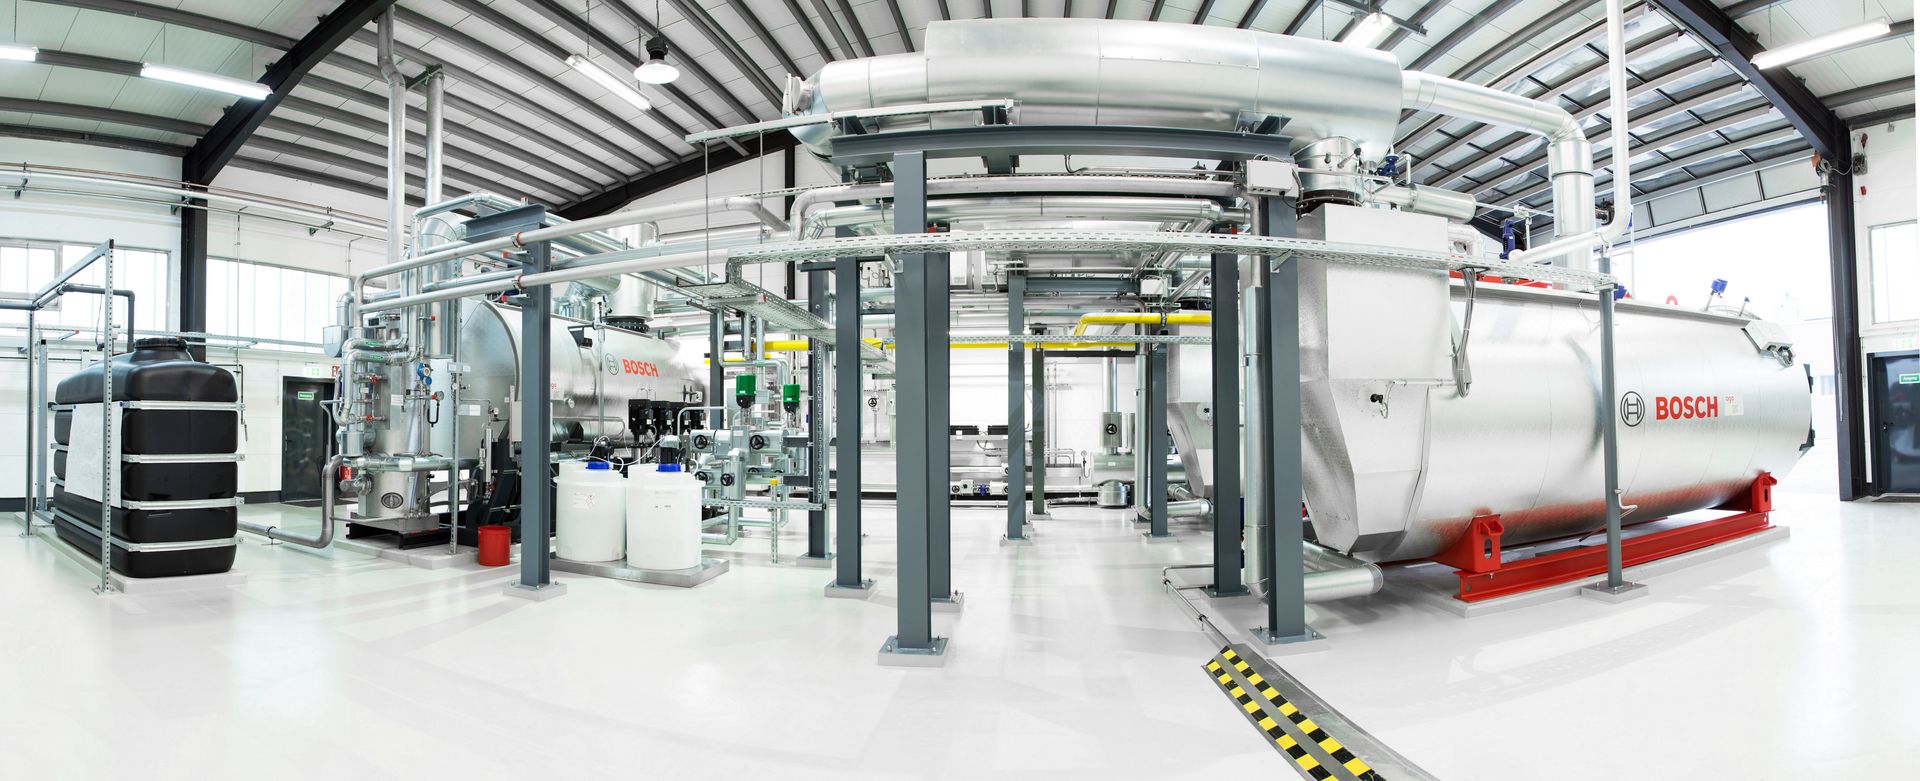 Bosch Industriekessel GmbH - Industrial Boilers